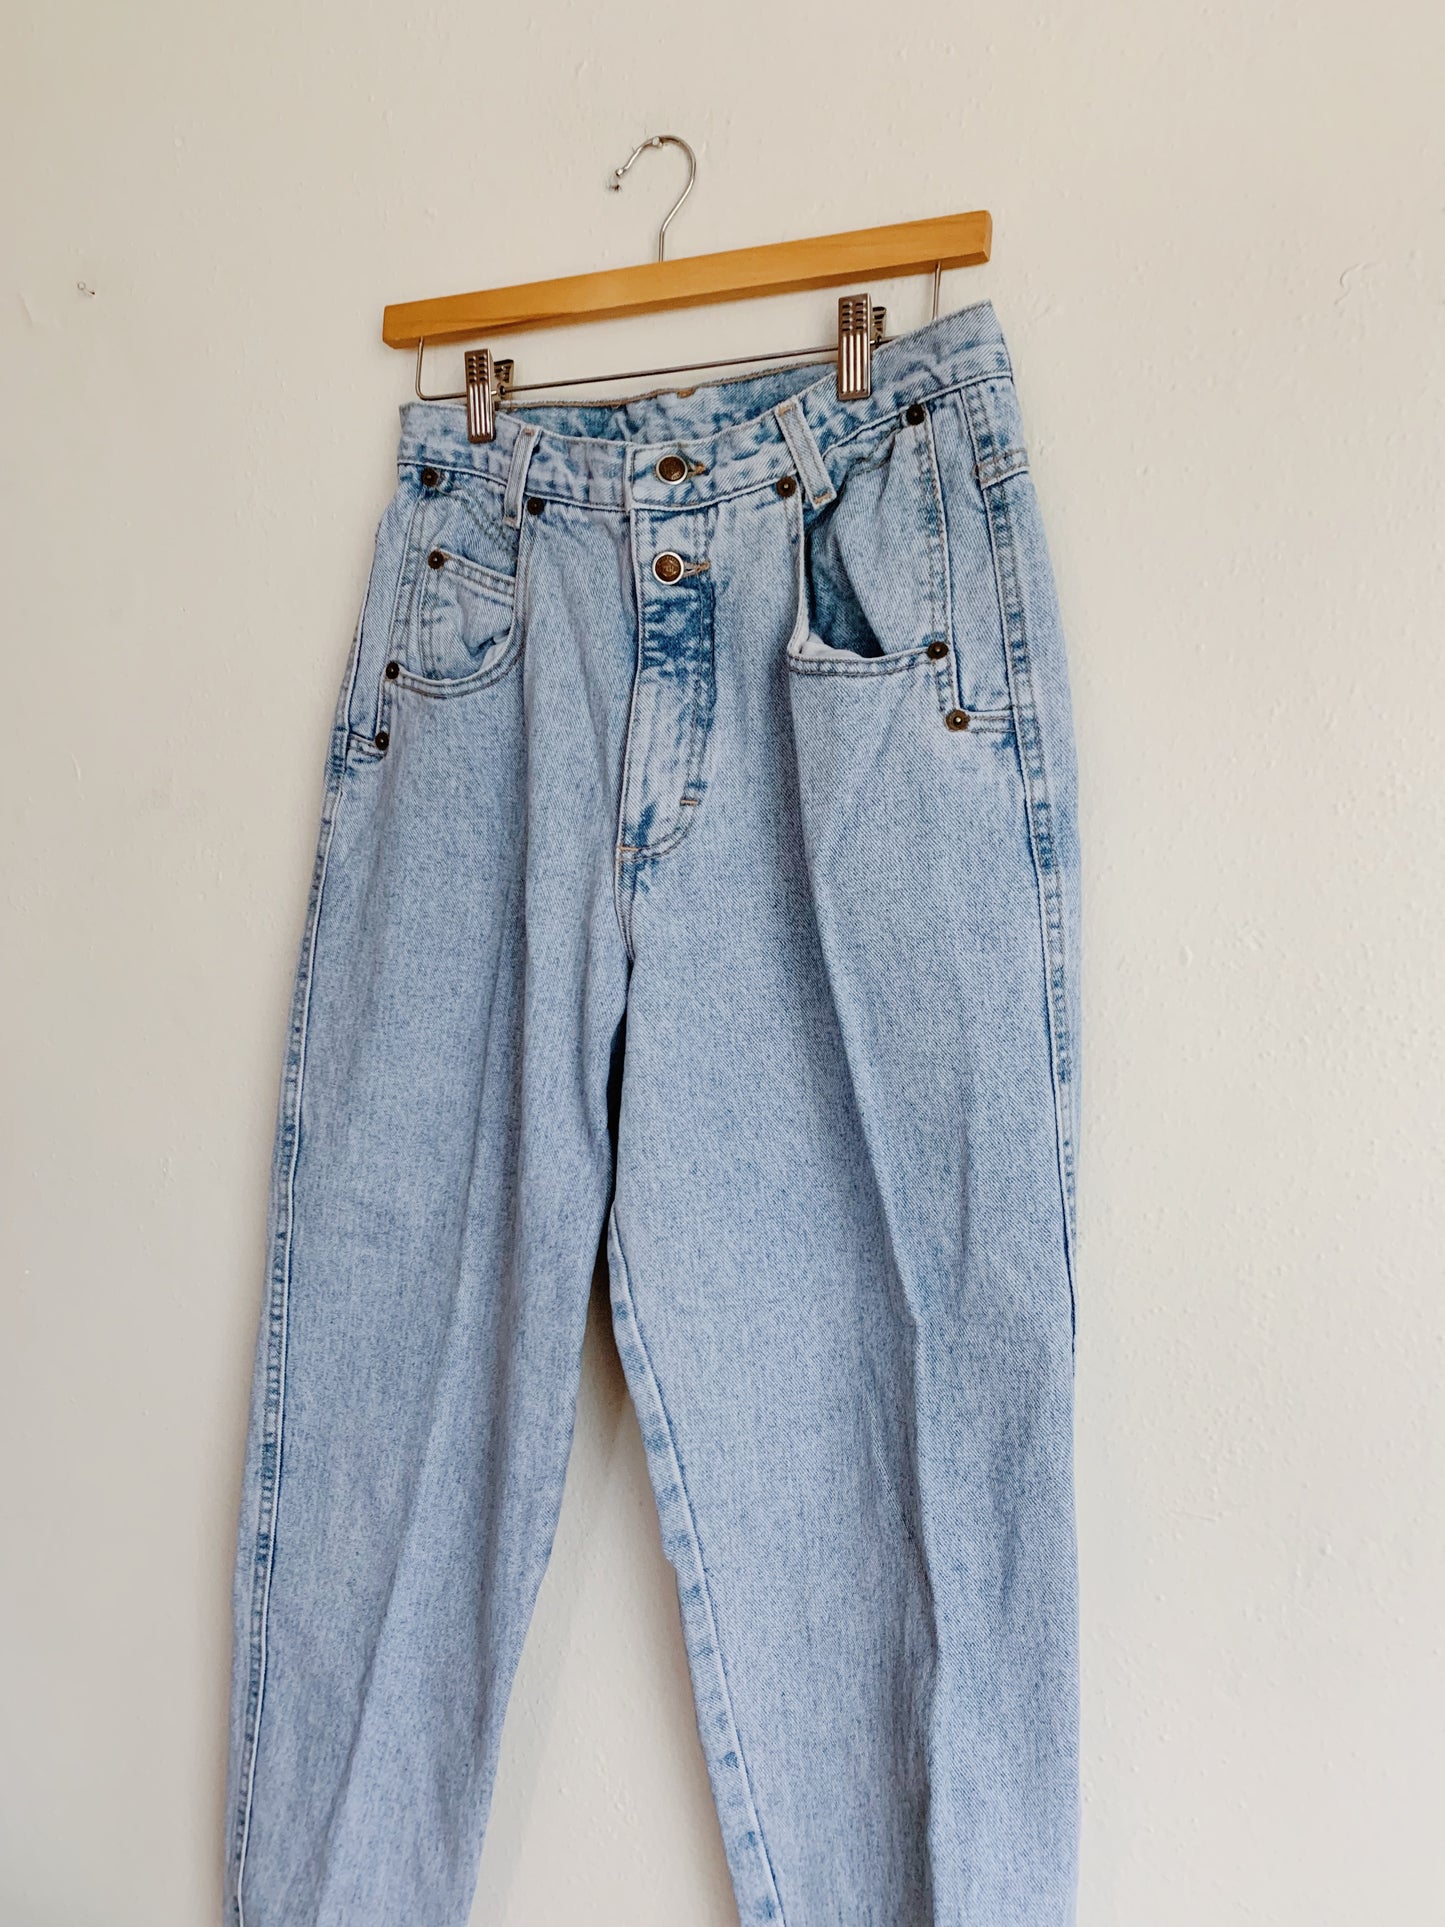 Vintage Zena Jeans (30x26.5)